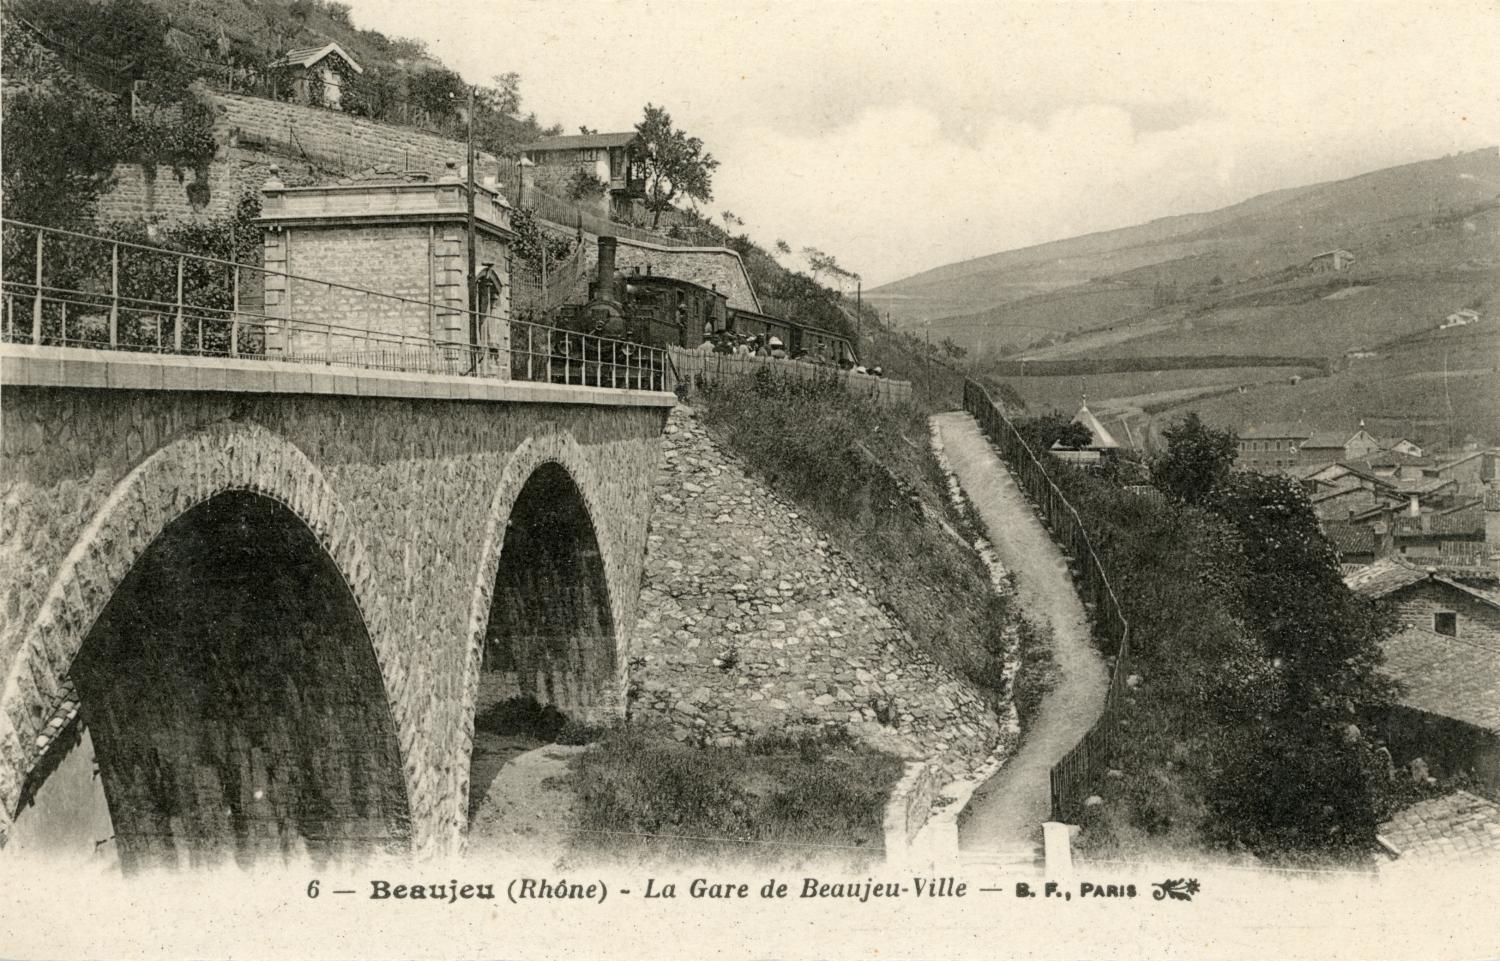 Beaujeu (Rhône). - La gare de Beaujeu-Ville